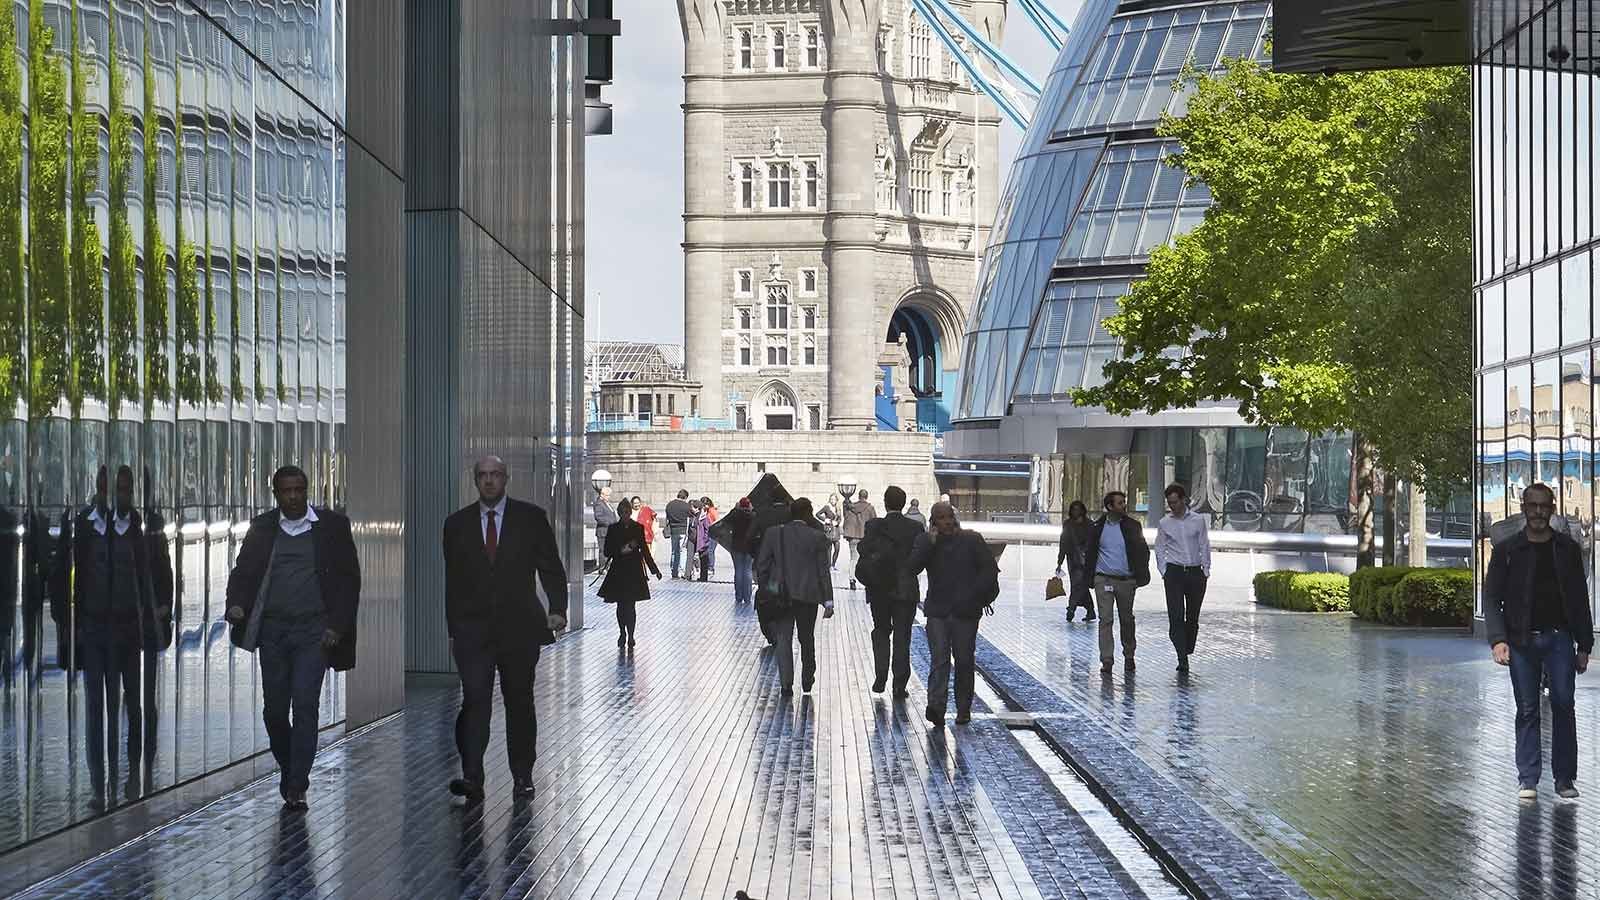 London People Walking to Tower Bridge - Mace Group